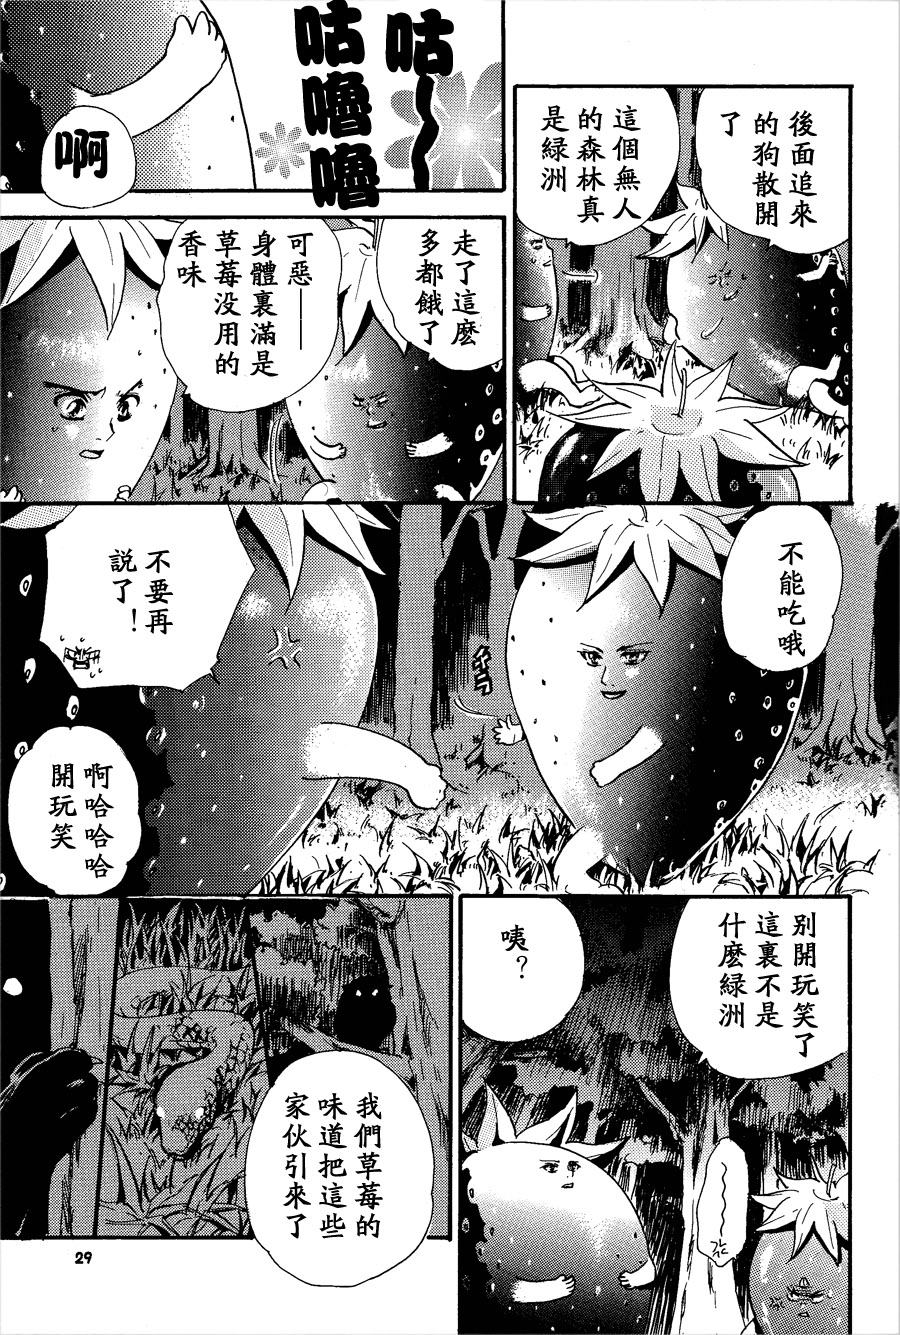 【漫画】Box Twin/如月円《草莓之吻》NO.65 Img_1577